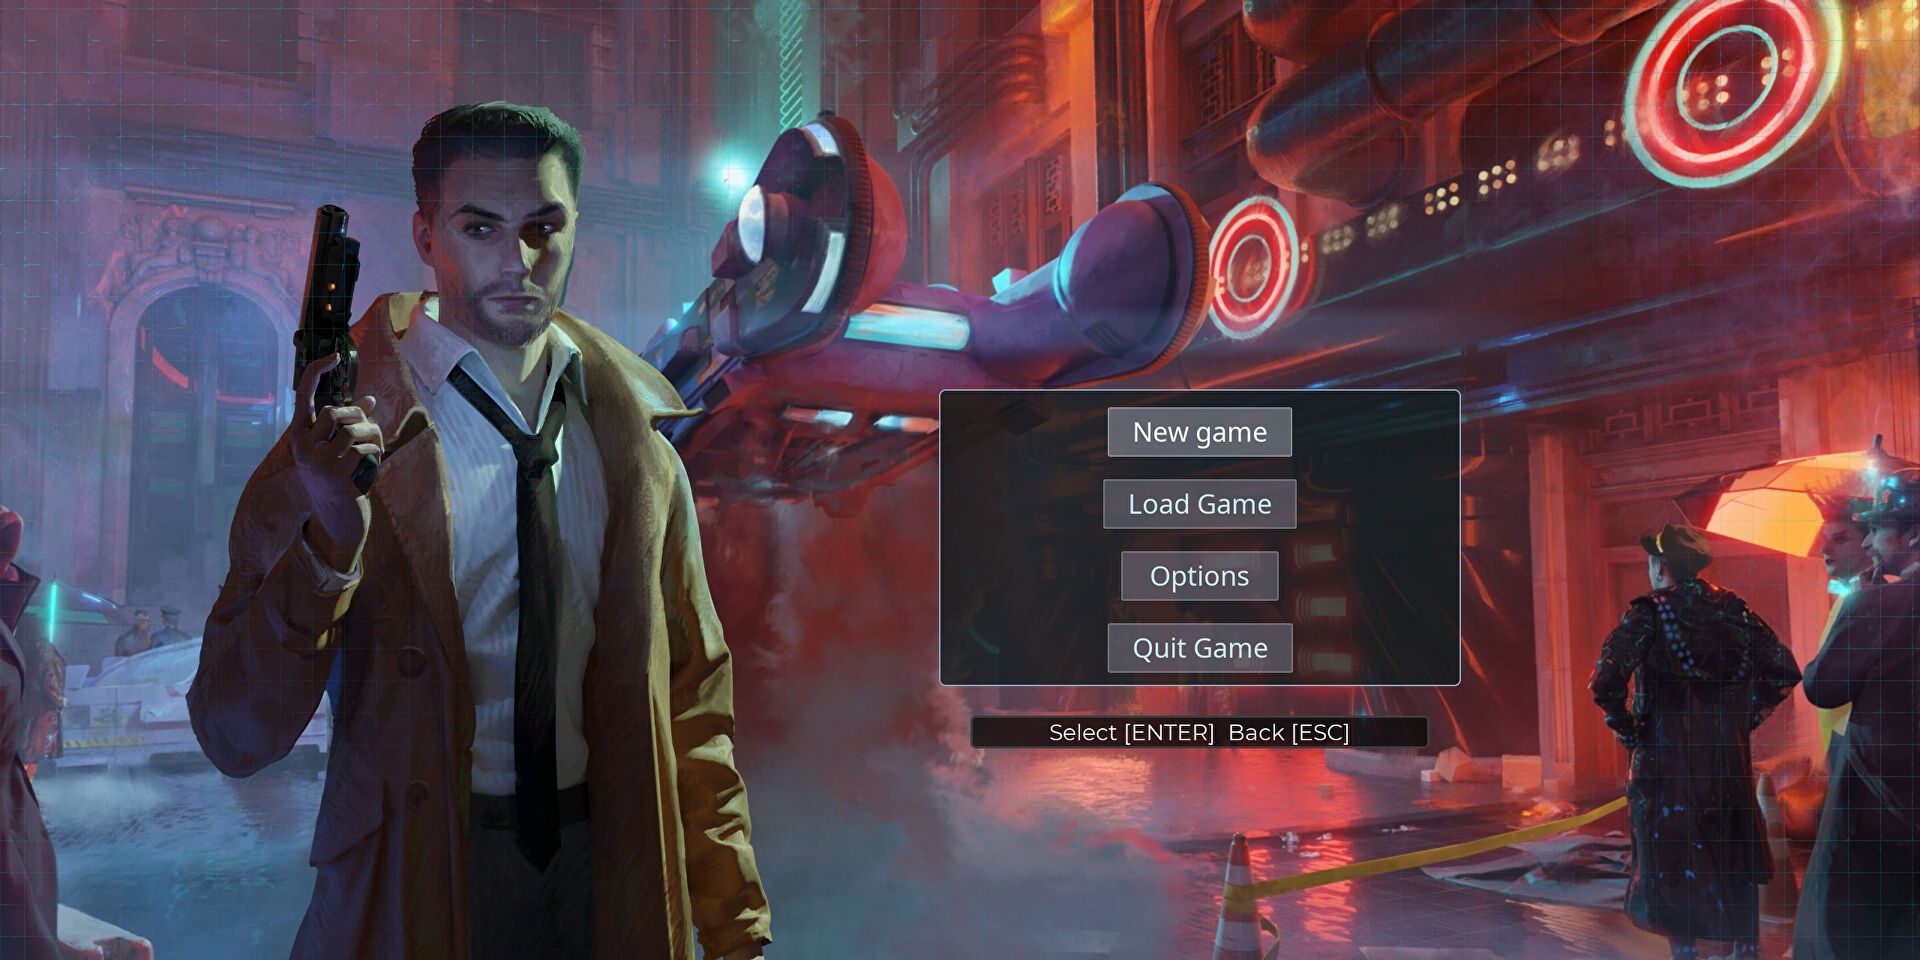 A screenshot showing the main menu in Blade Runner: Enhanced Edition